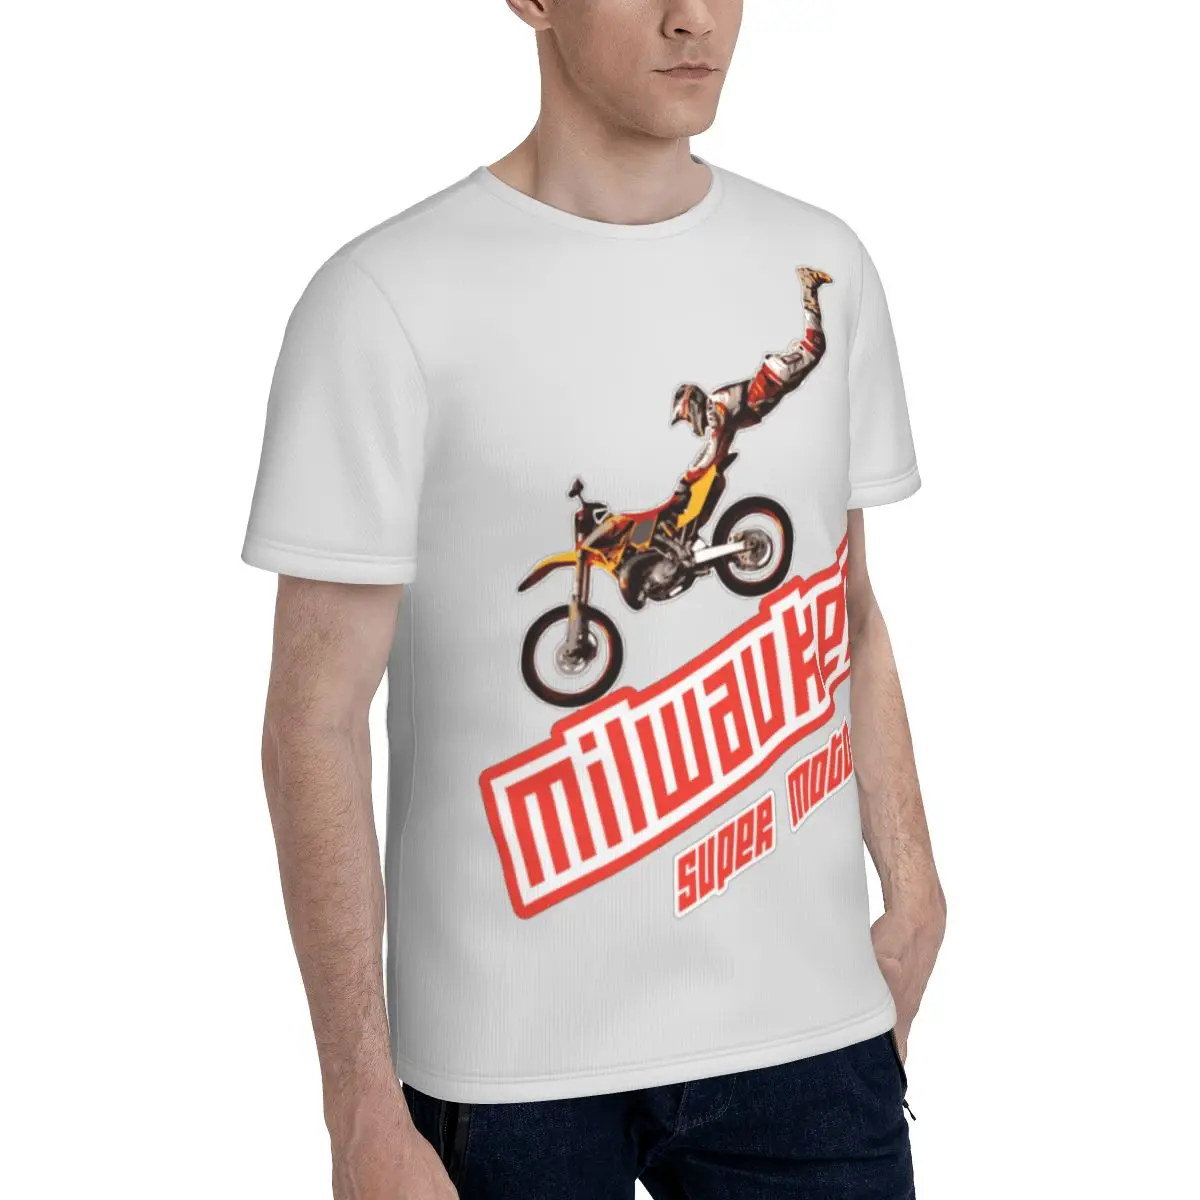 Promo Baseball Milwaukees Tools Super Pullover T-shirt Funny Men's T Shirt Print Nerdy R258 Tops Tees European Size